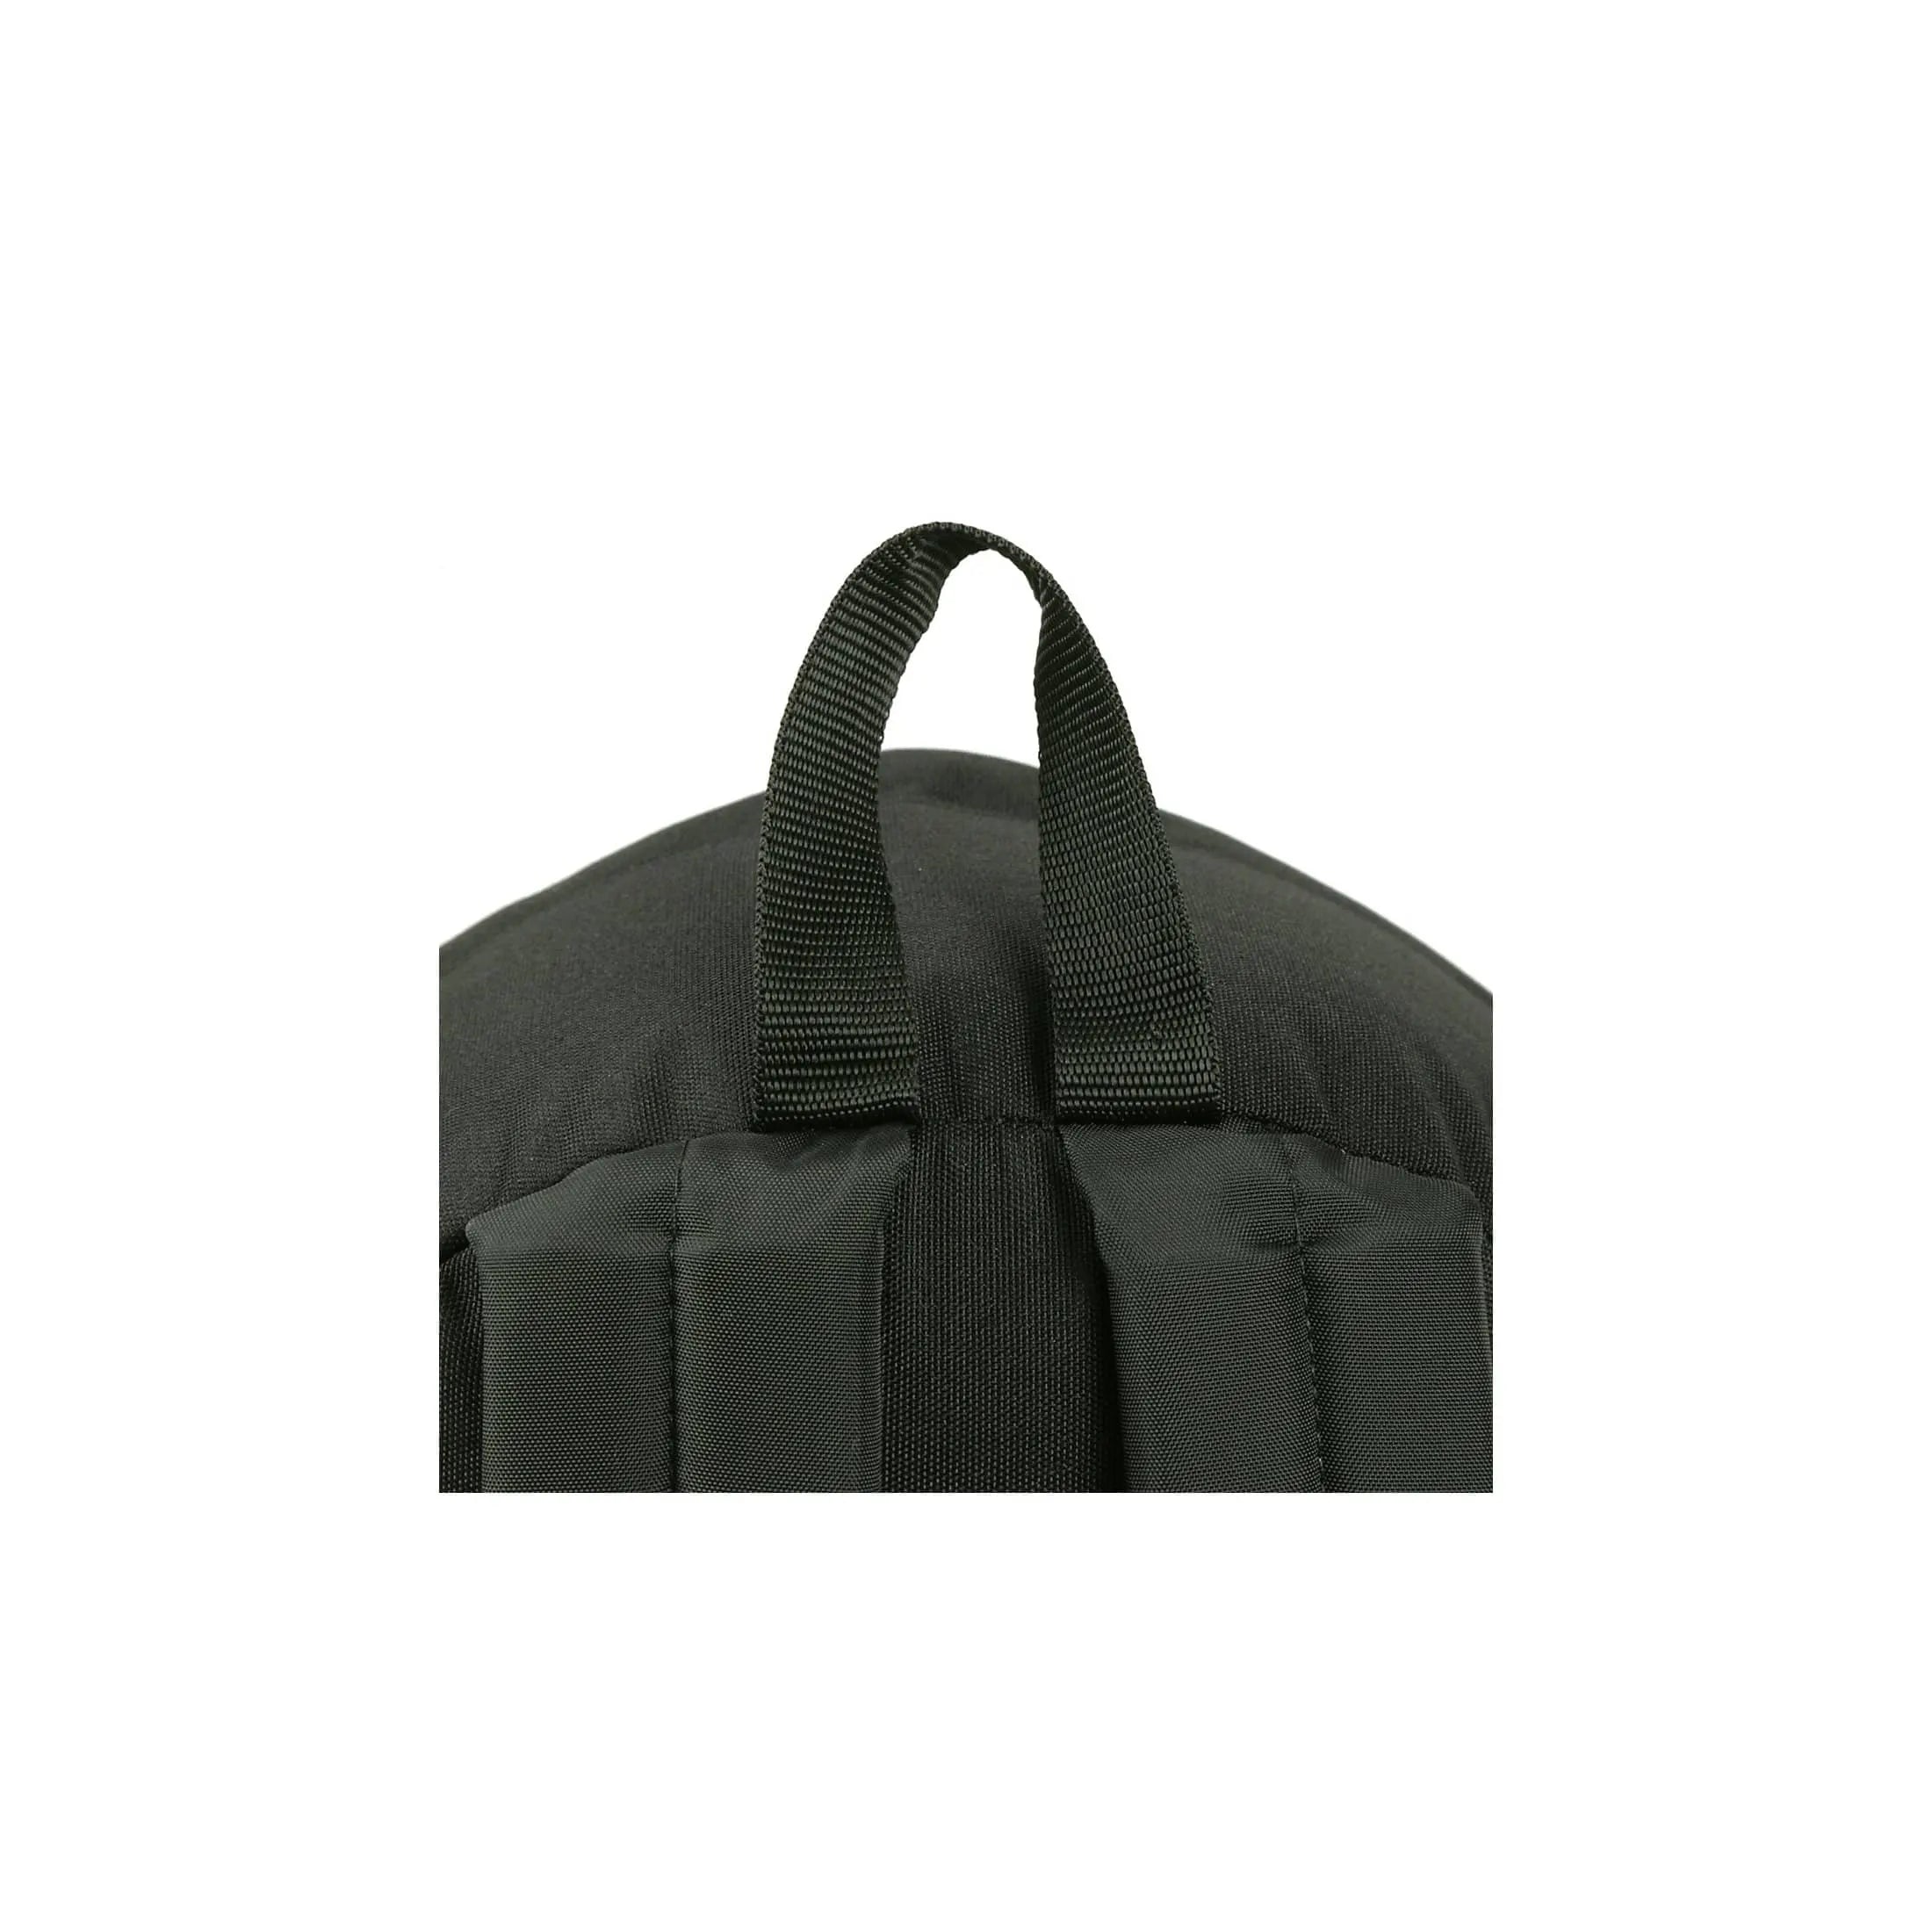 Eastpak Authentic Padded Pak'r leisure backpack 41 cm - Sailor Double